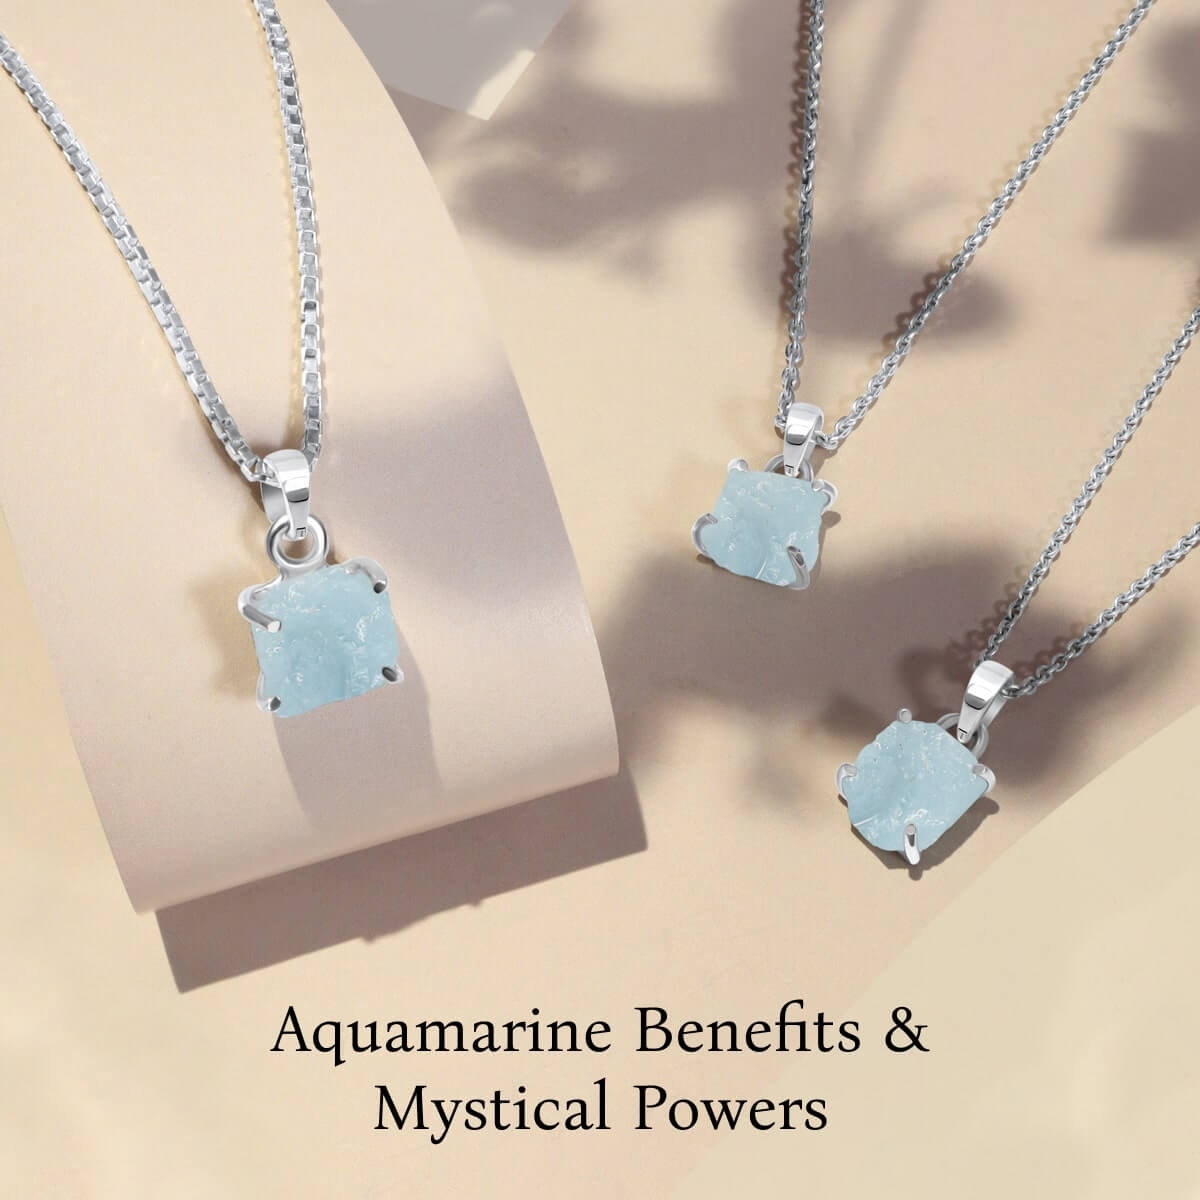 Aquamarine Benefits & Mystical Powers